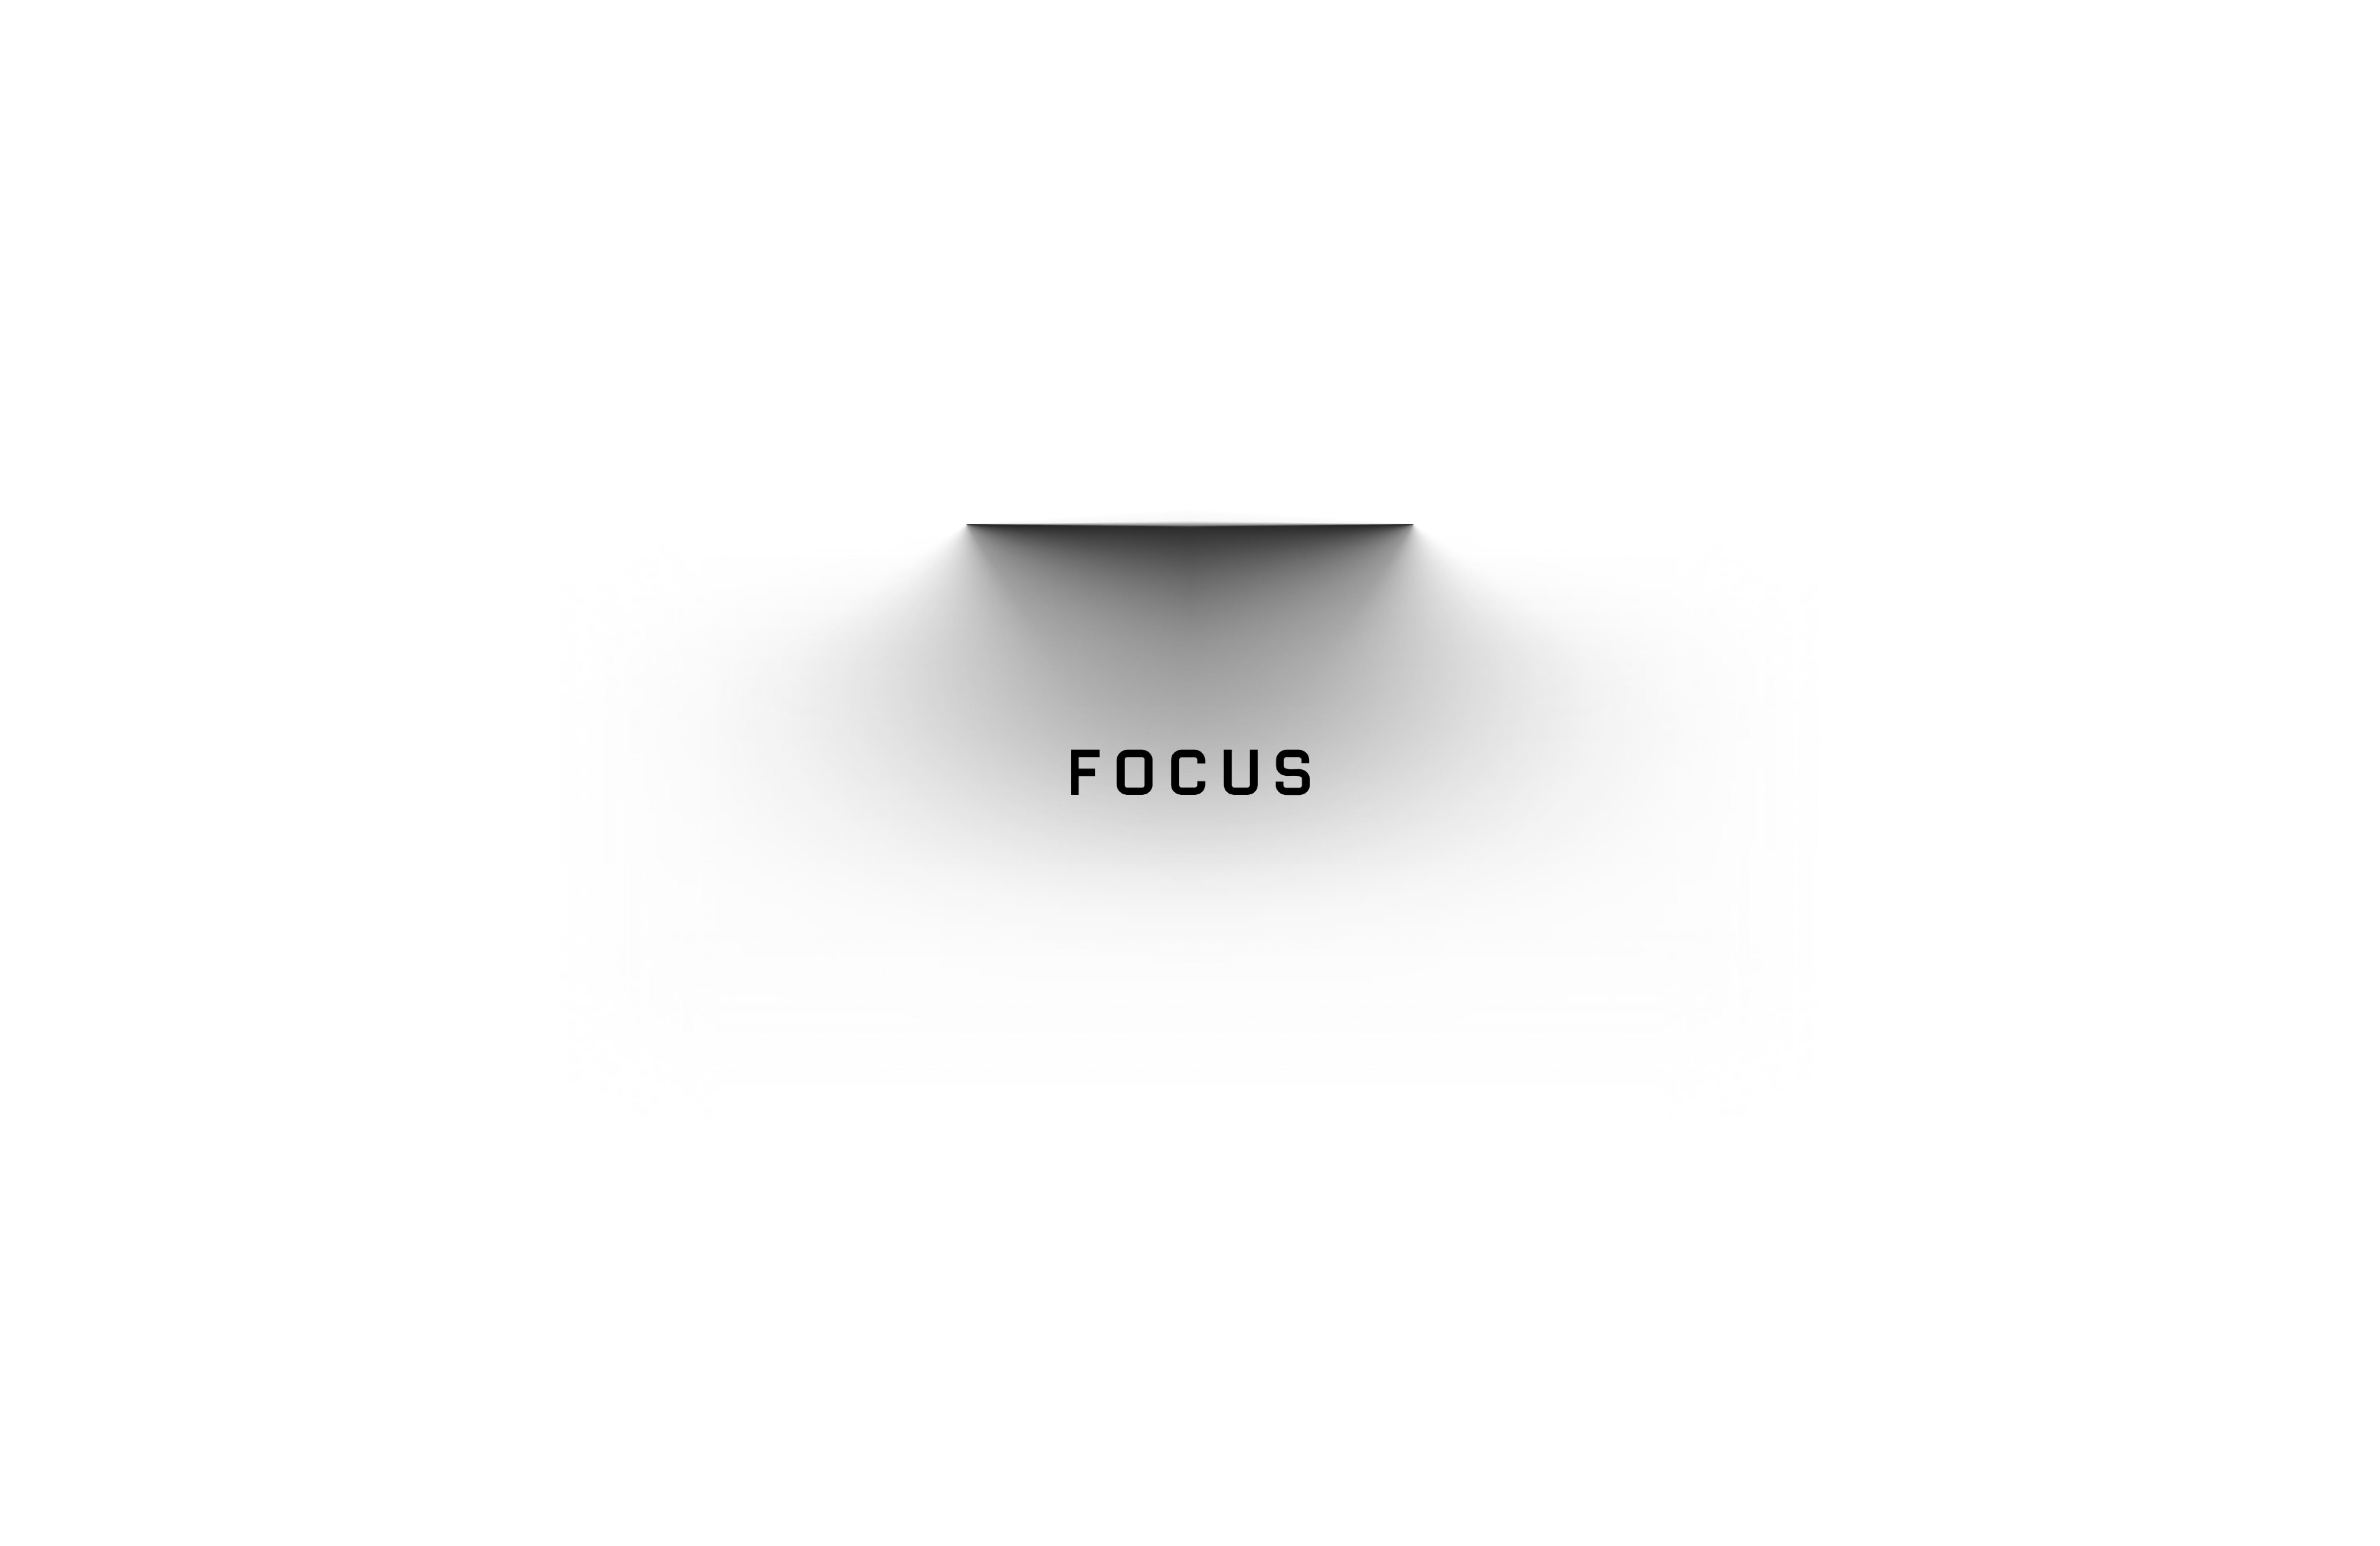 focus wallpaper hd